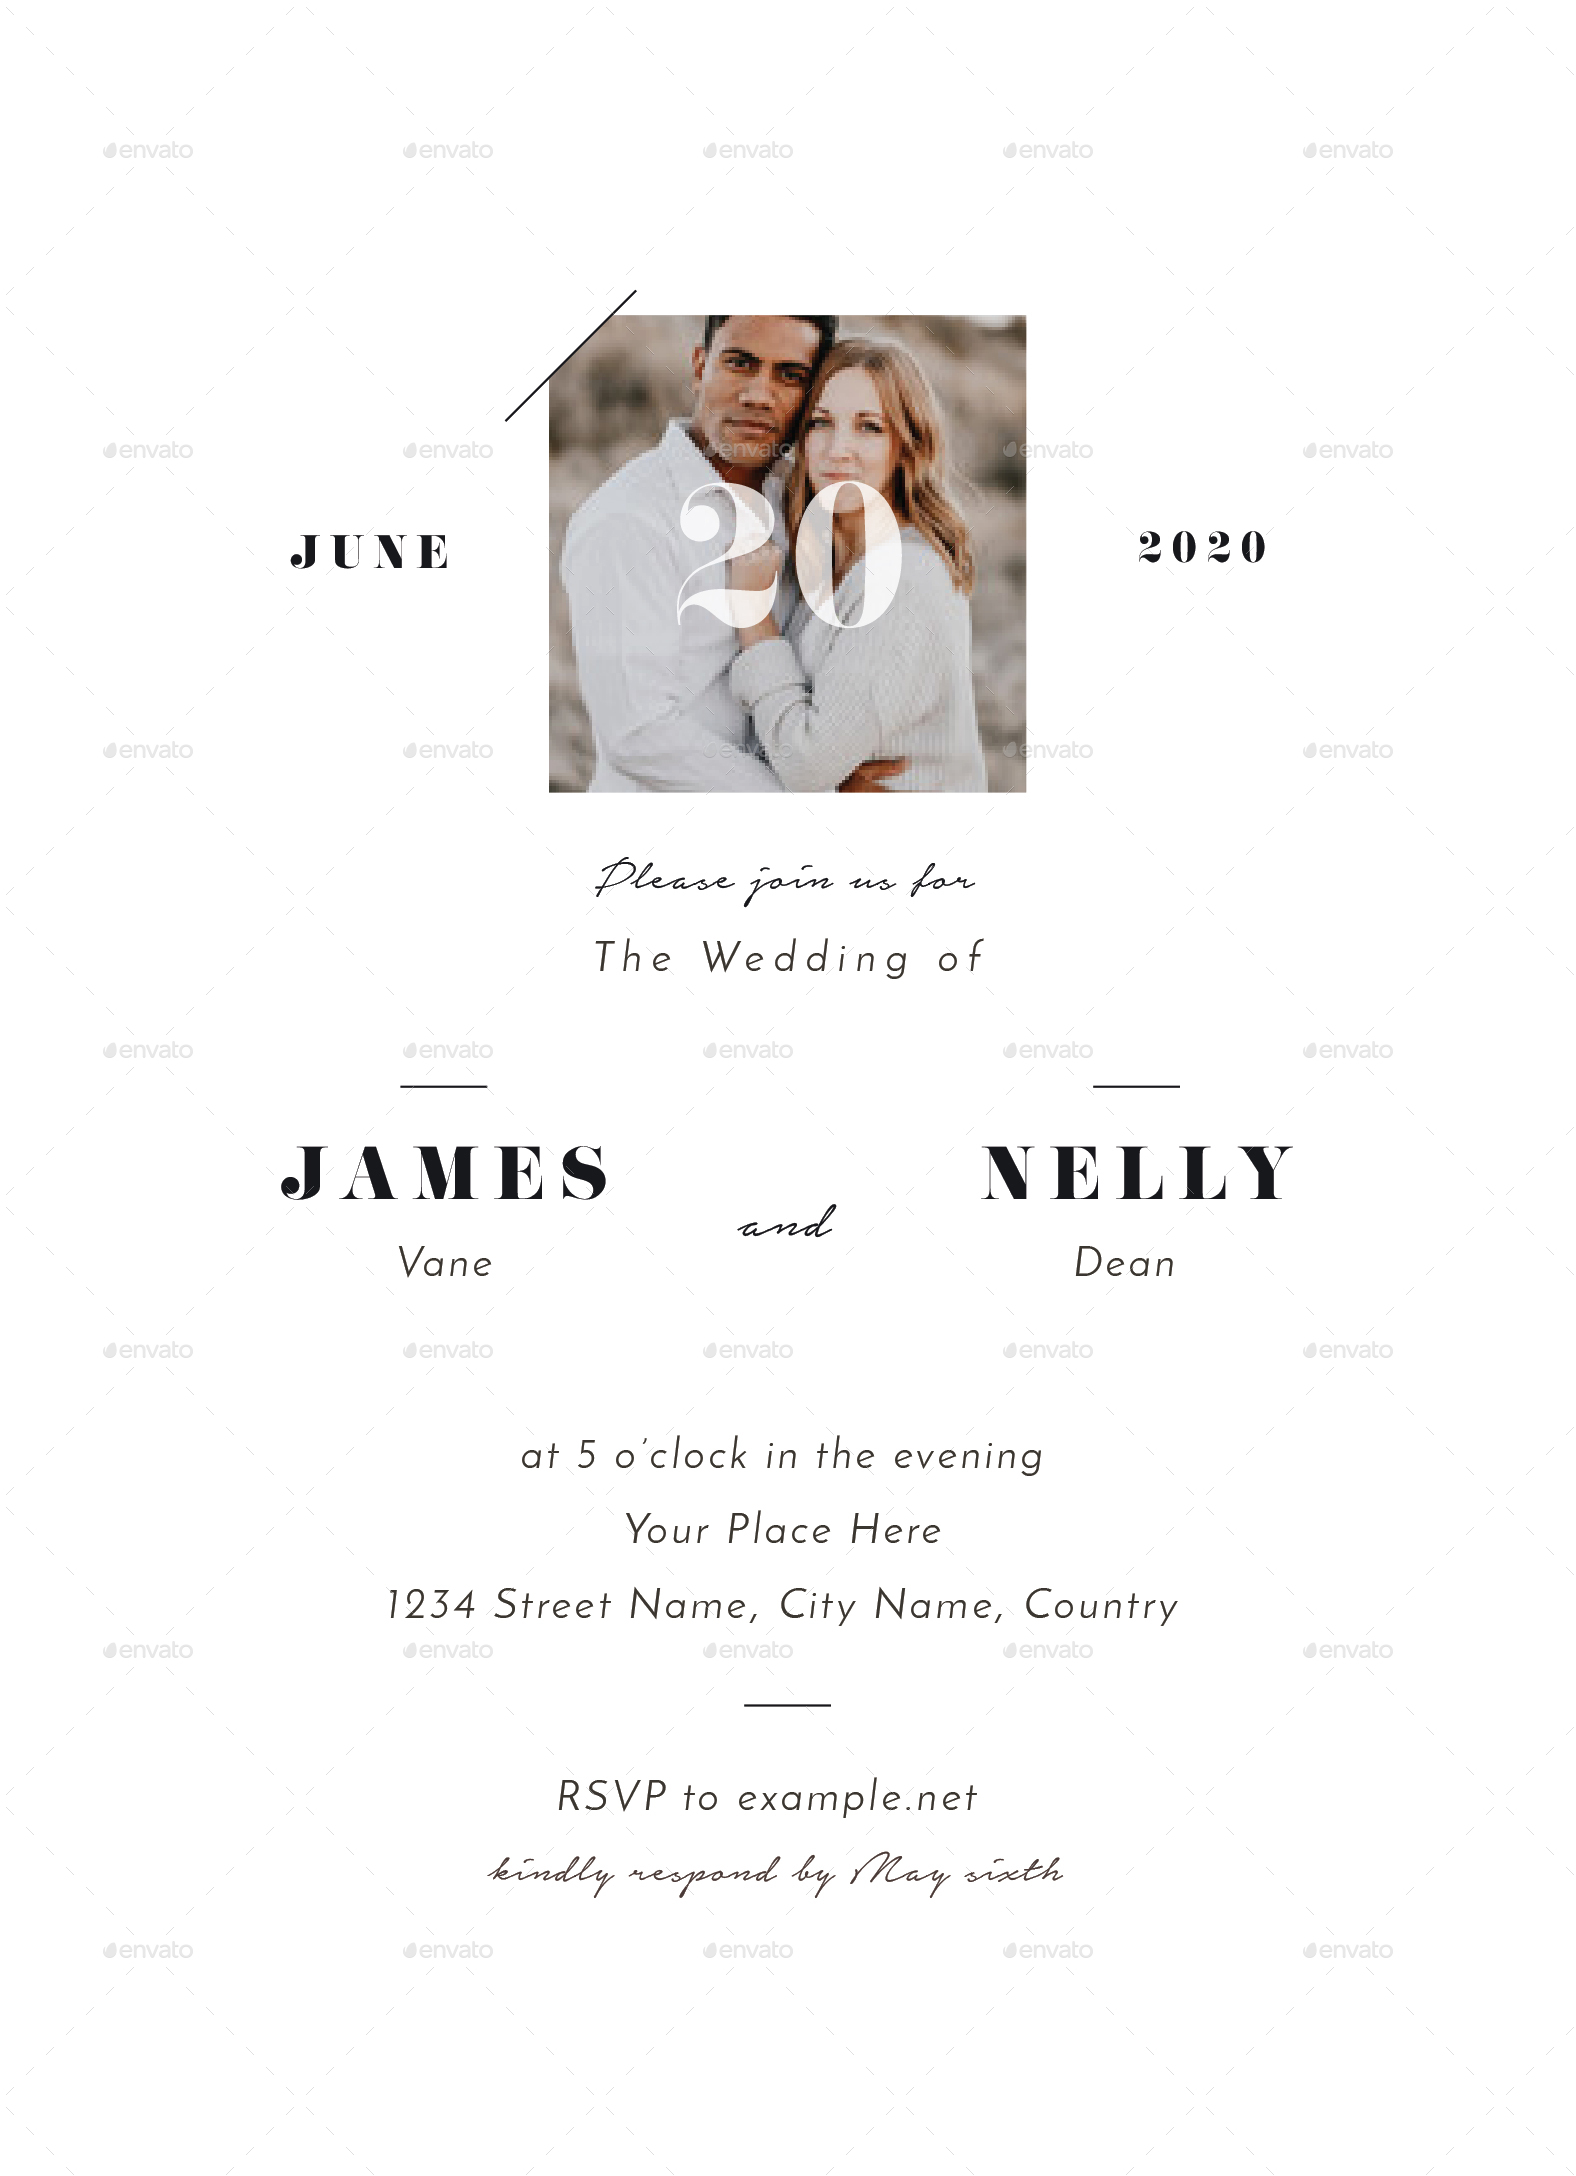 Elegant Wedding Anniversary Party Invitation By Vynetta GraphicRiver